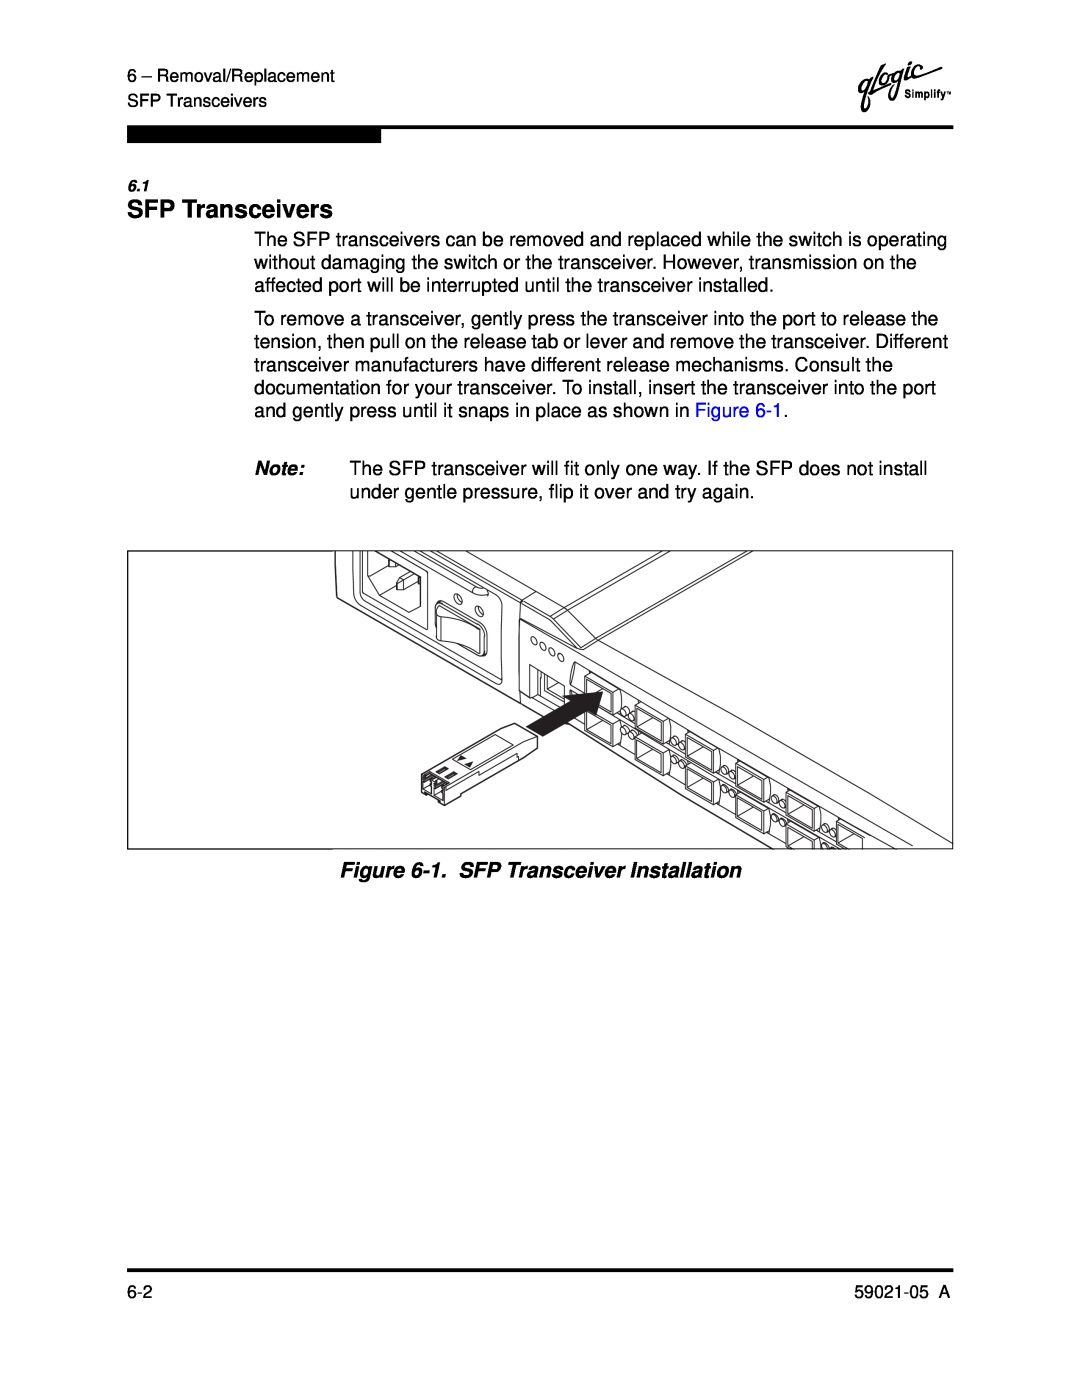 Q-Logic 59021-05 manual SFP Transceivers, 1. SFP Transceiver Installation 